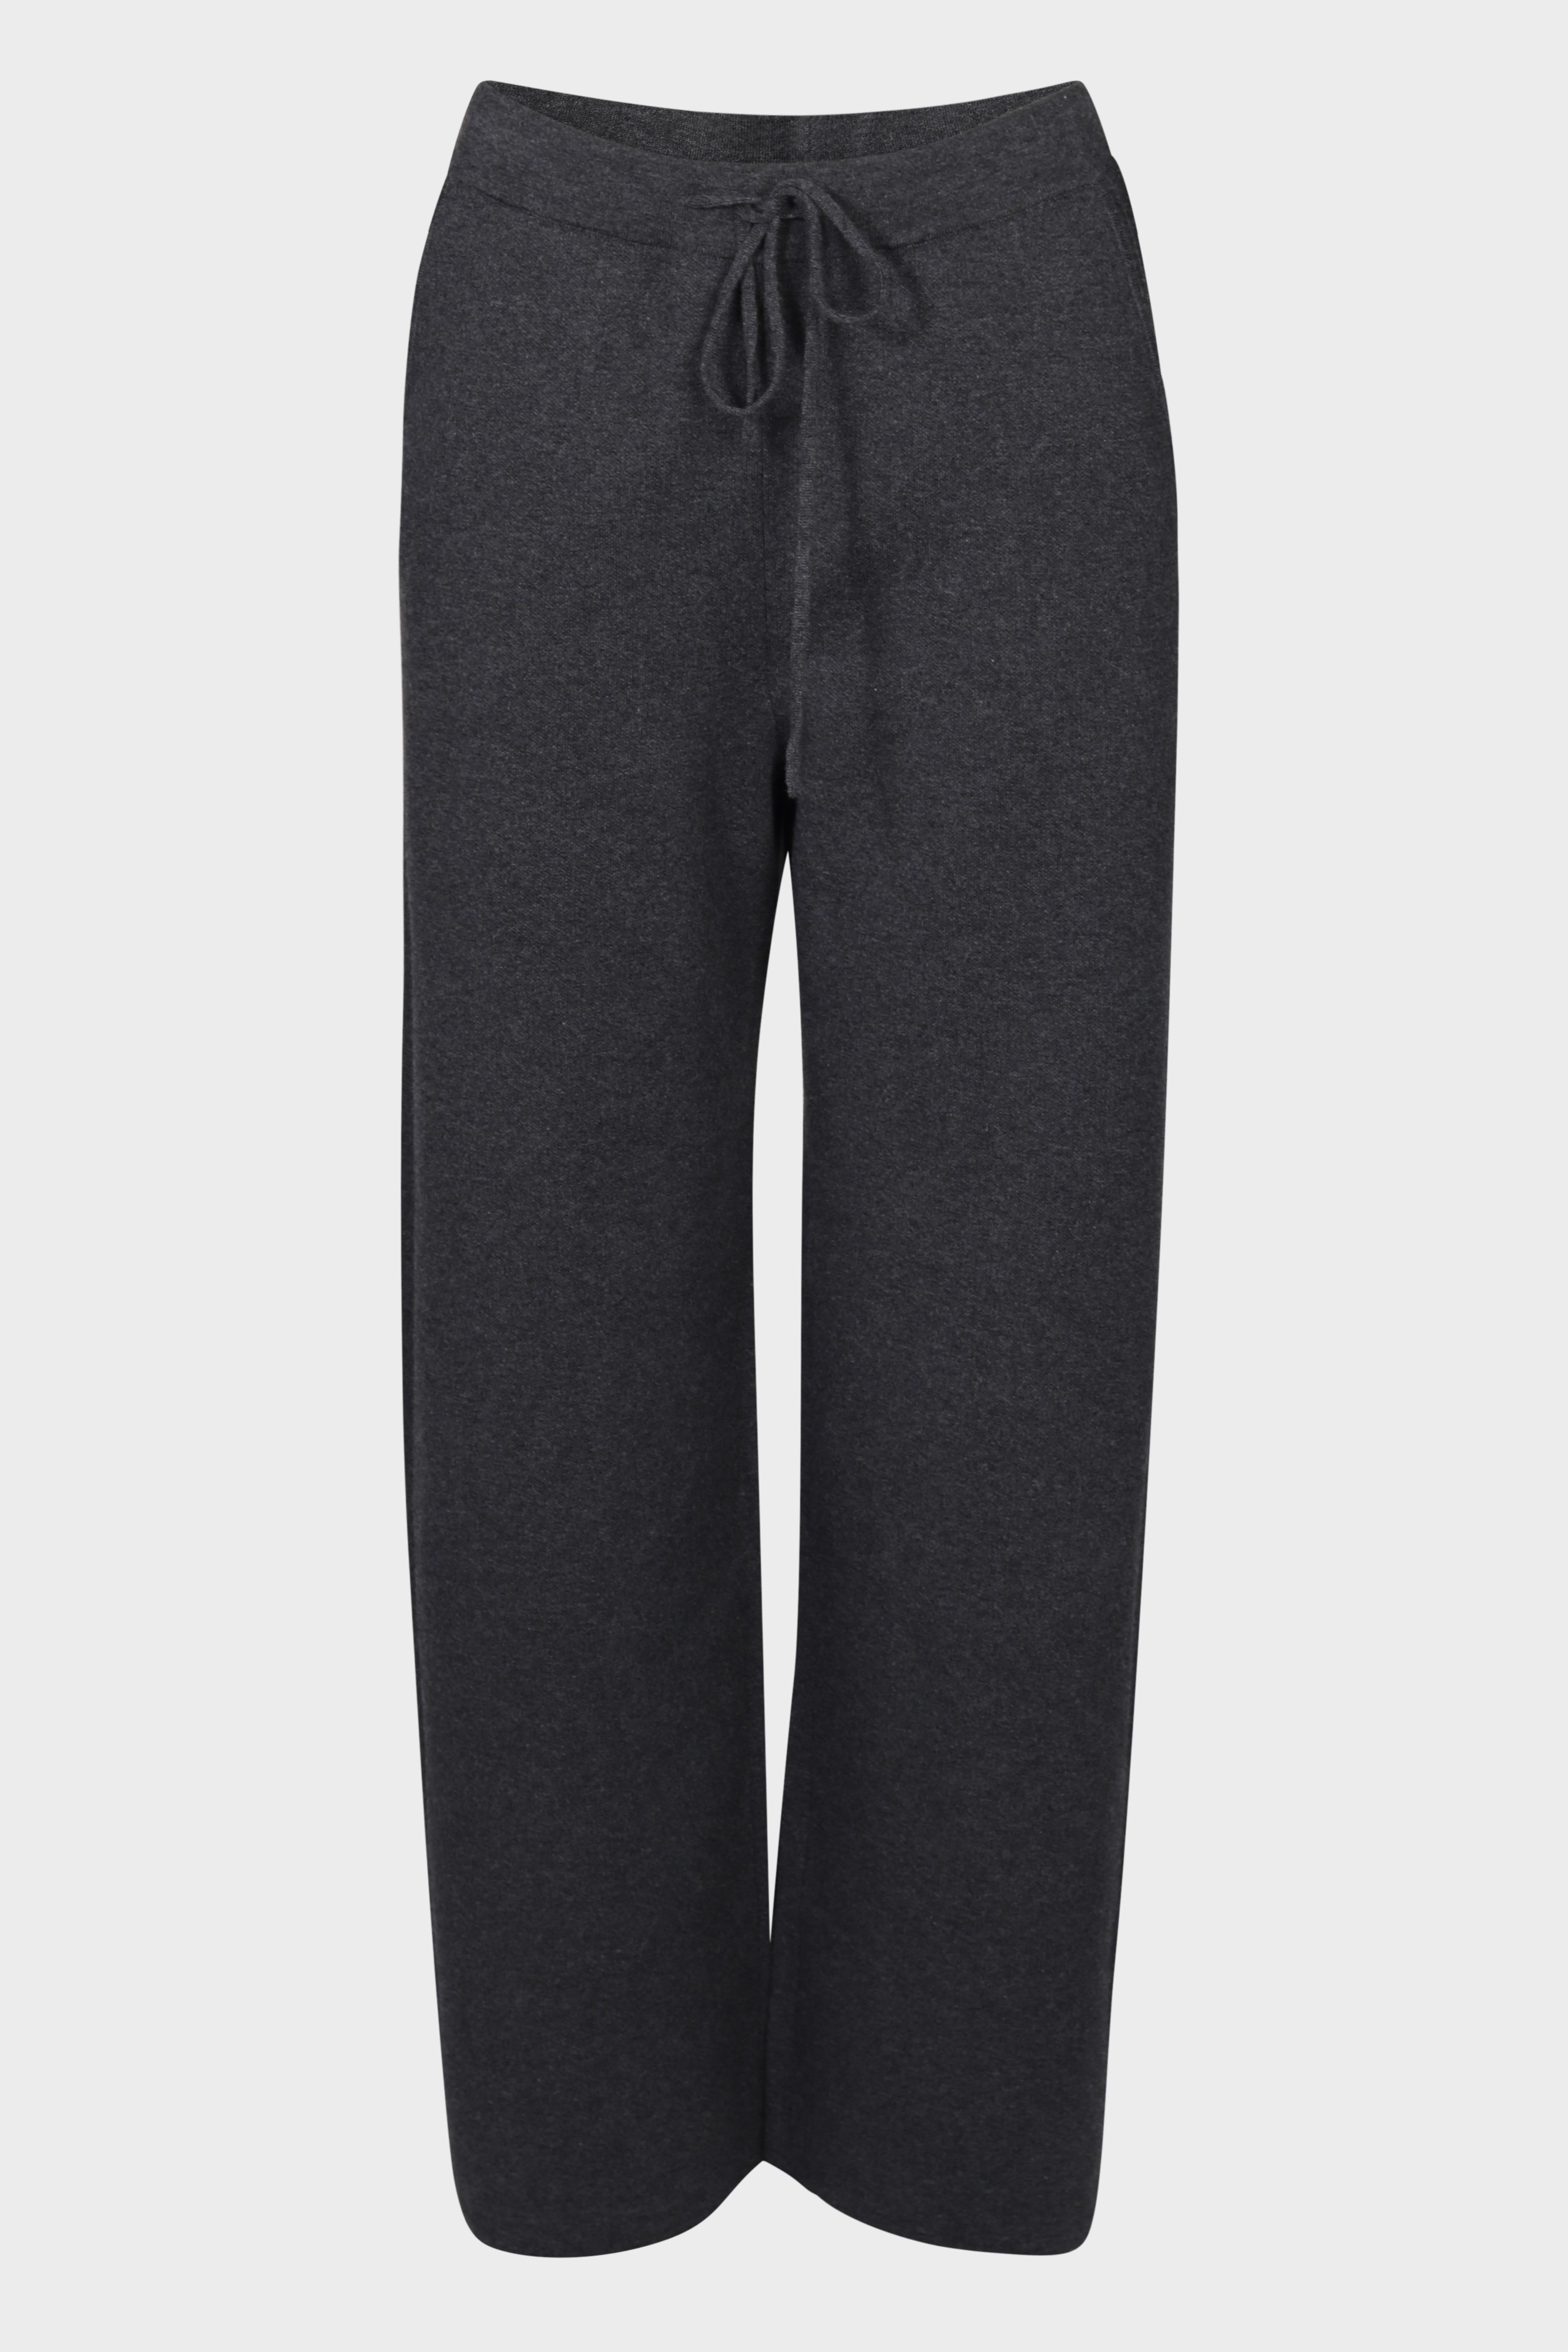 FLONA Cotton/ Cashmere Knit Pant in Dark Grey M